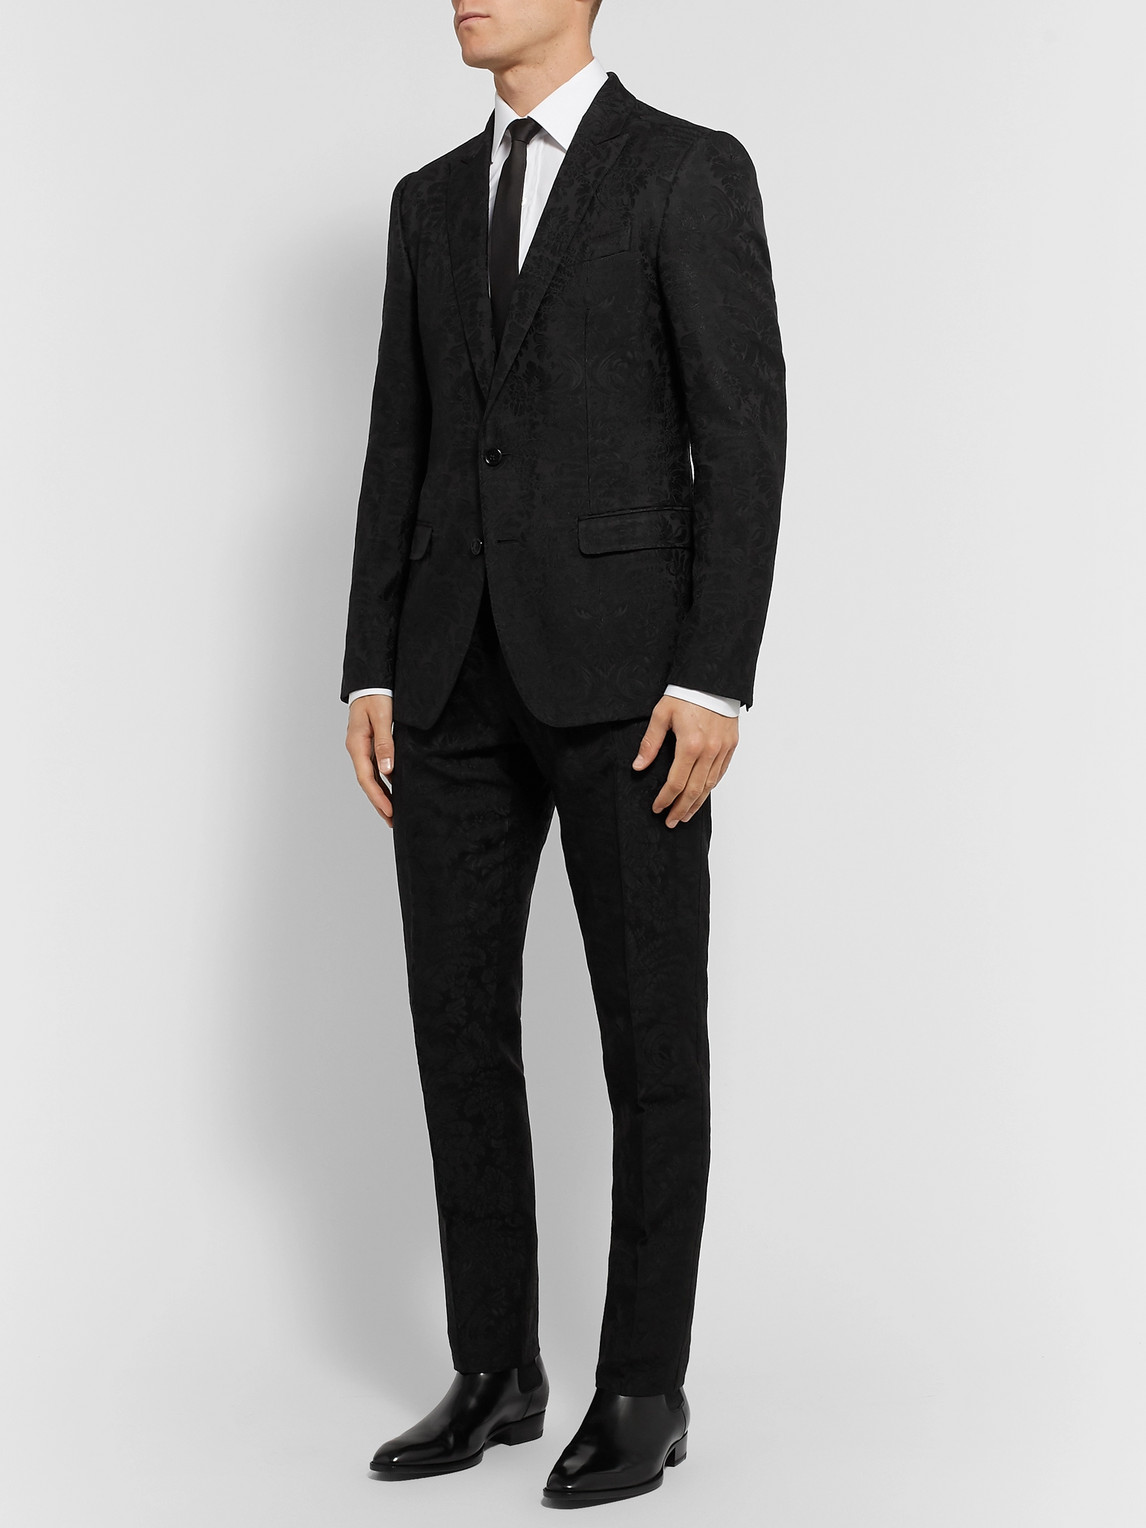 Dolce & Gabbana Black Slim-fit Jacquard Suit